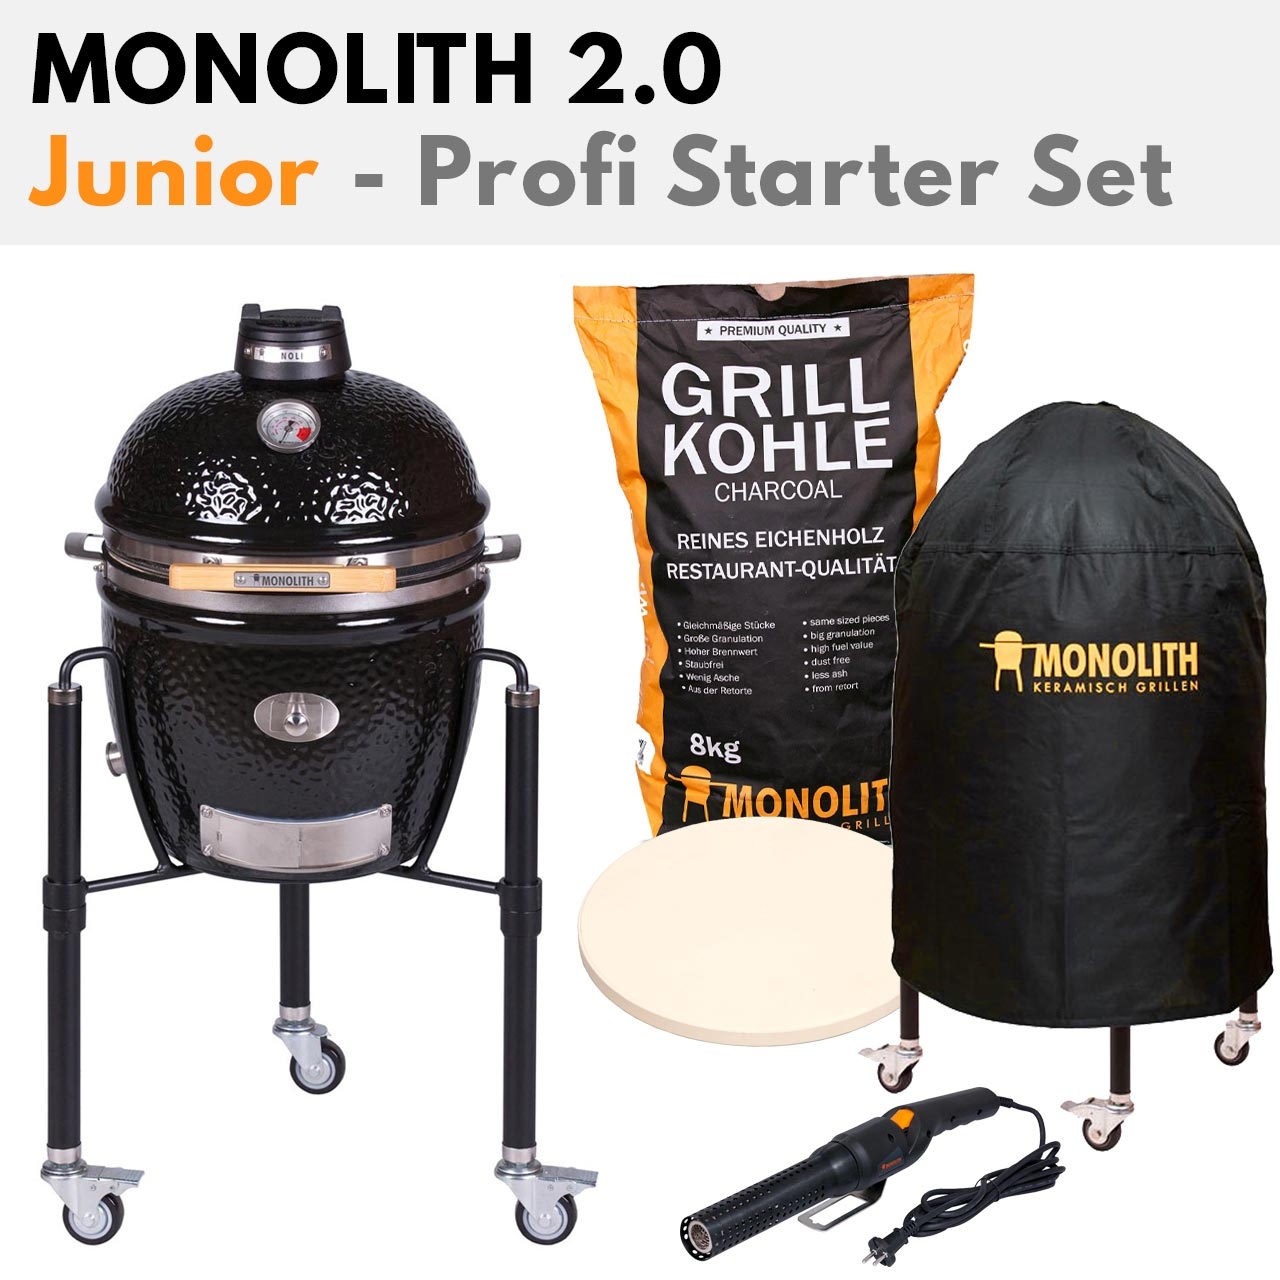 Monolith Junior Pro Serie 2.0 - Profi-Starter Set